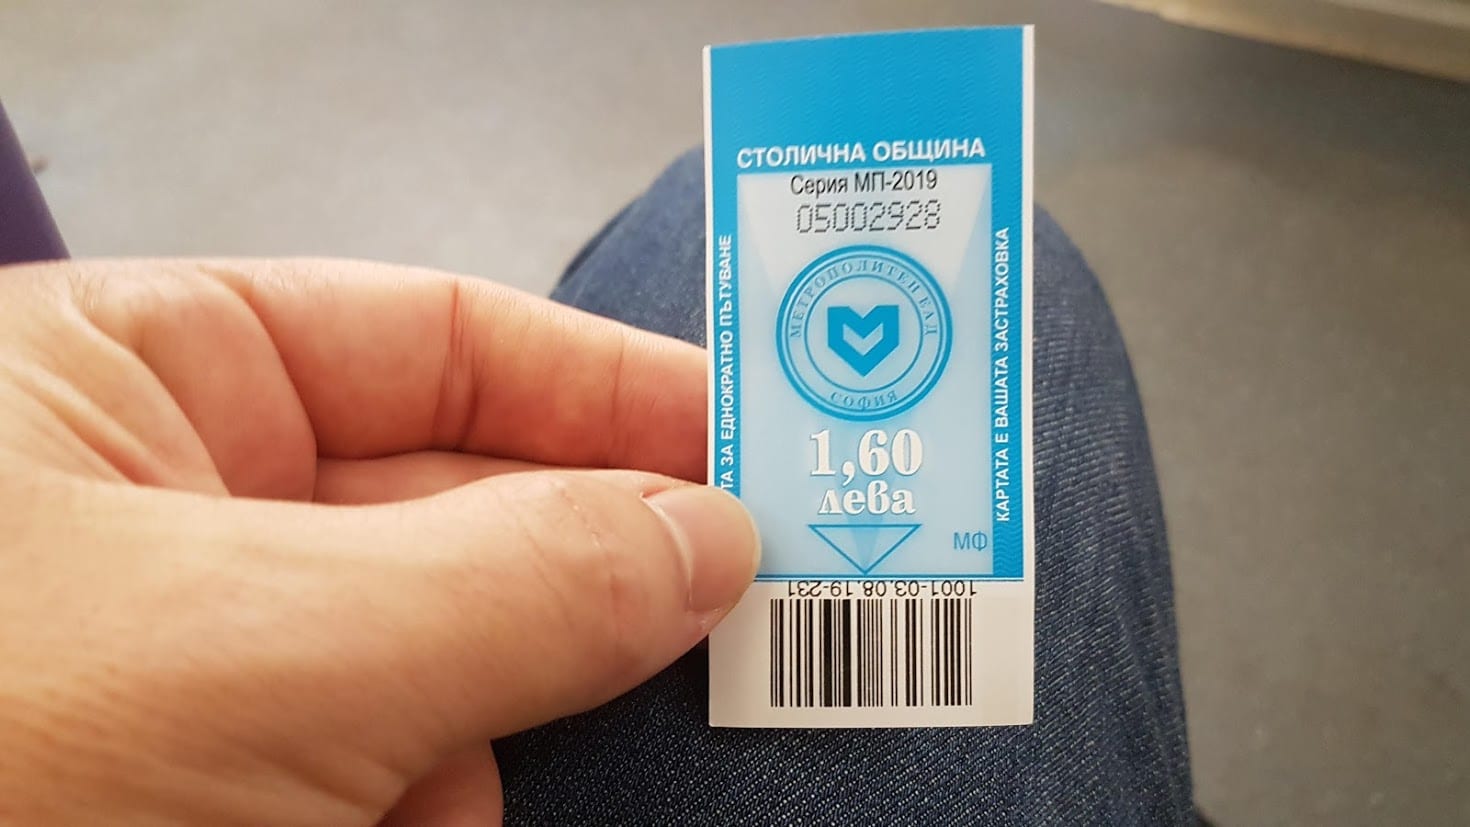 Sofia Airport Metro Ticket